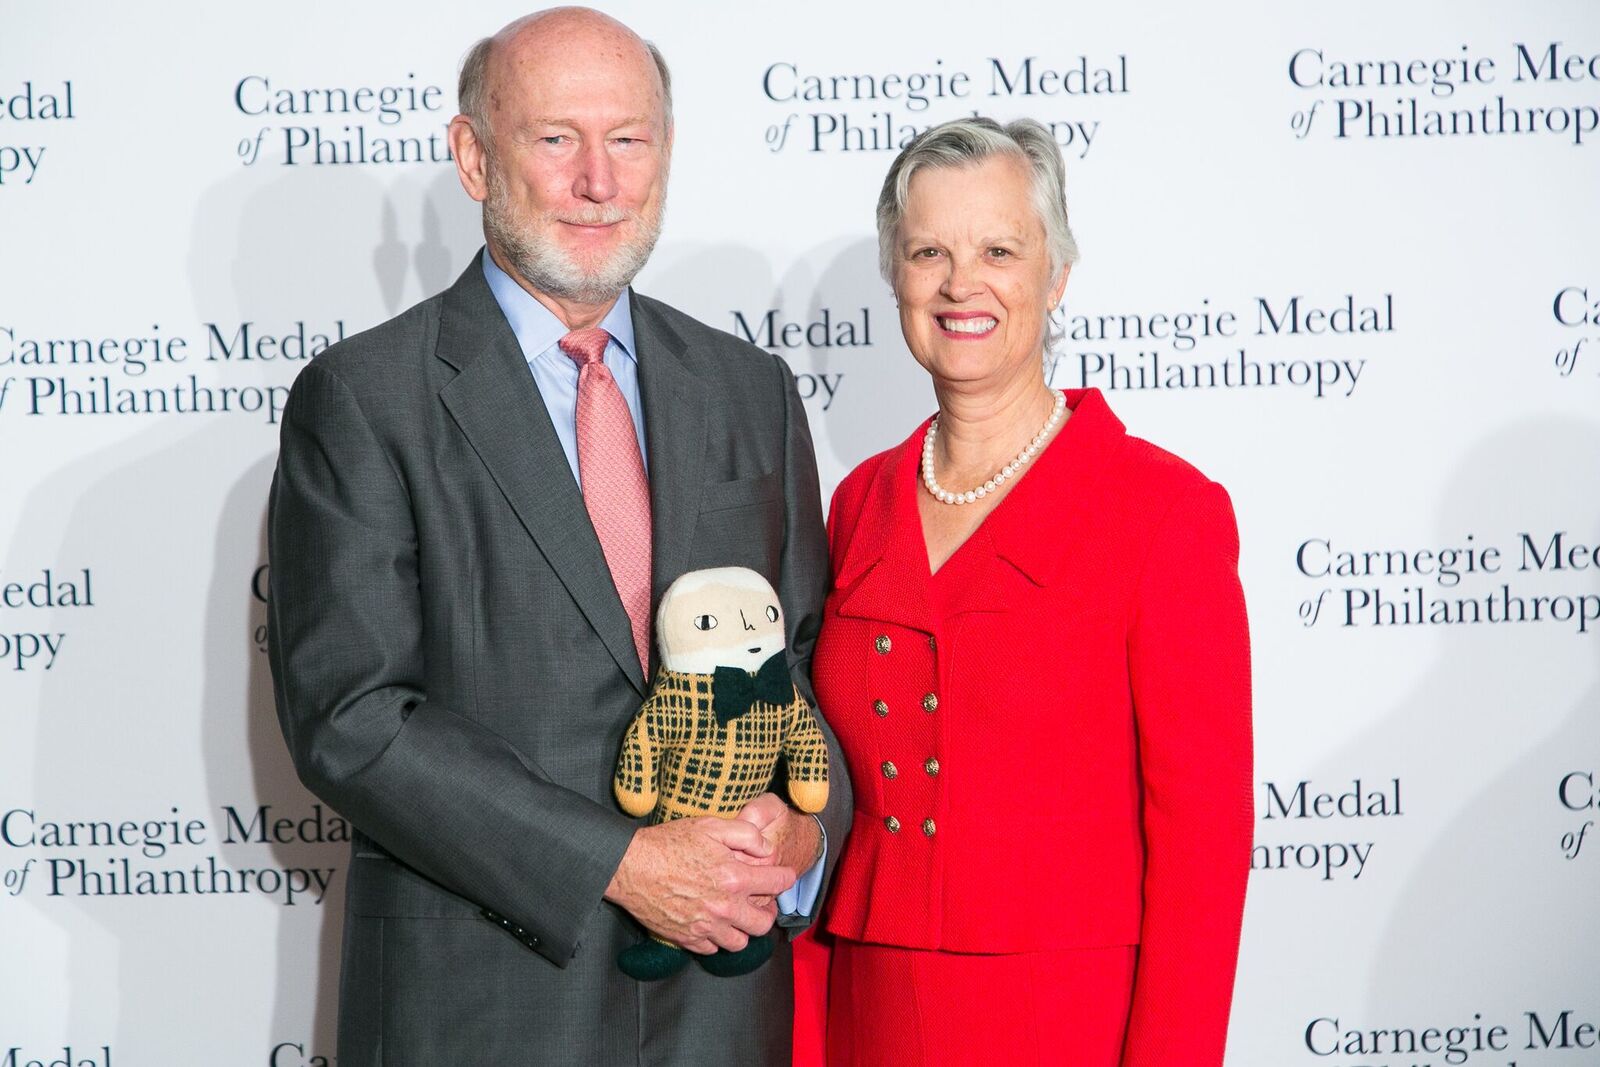 Nine philanthropists honored at Carnegie Medal of Philanthropy event